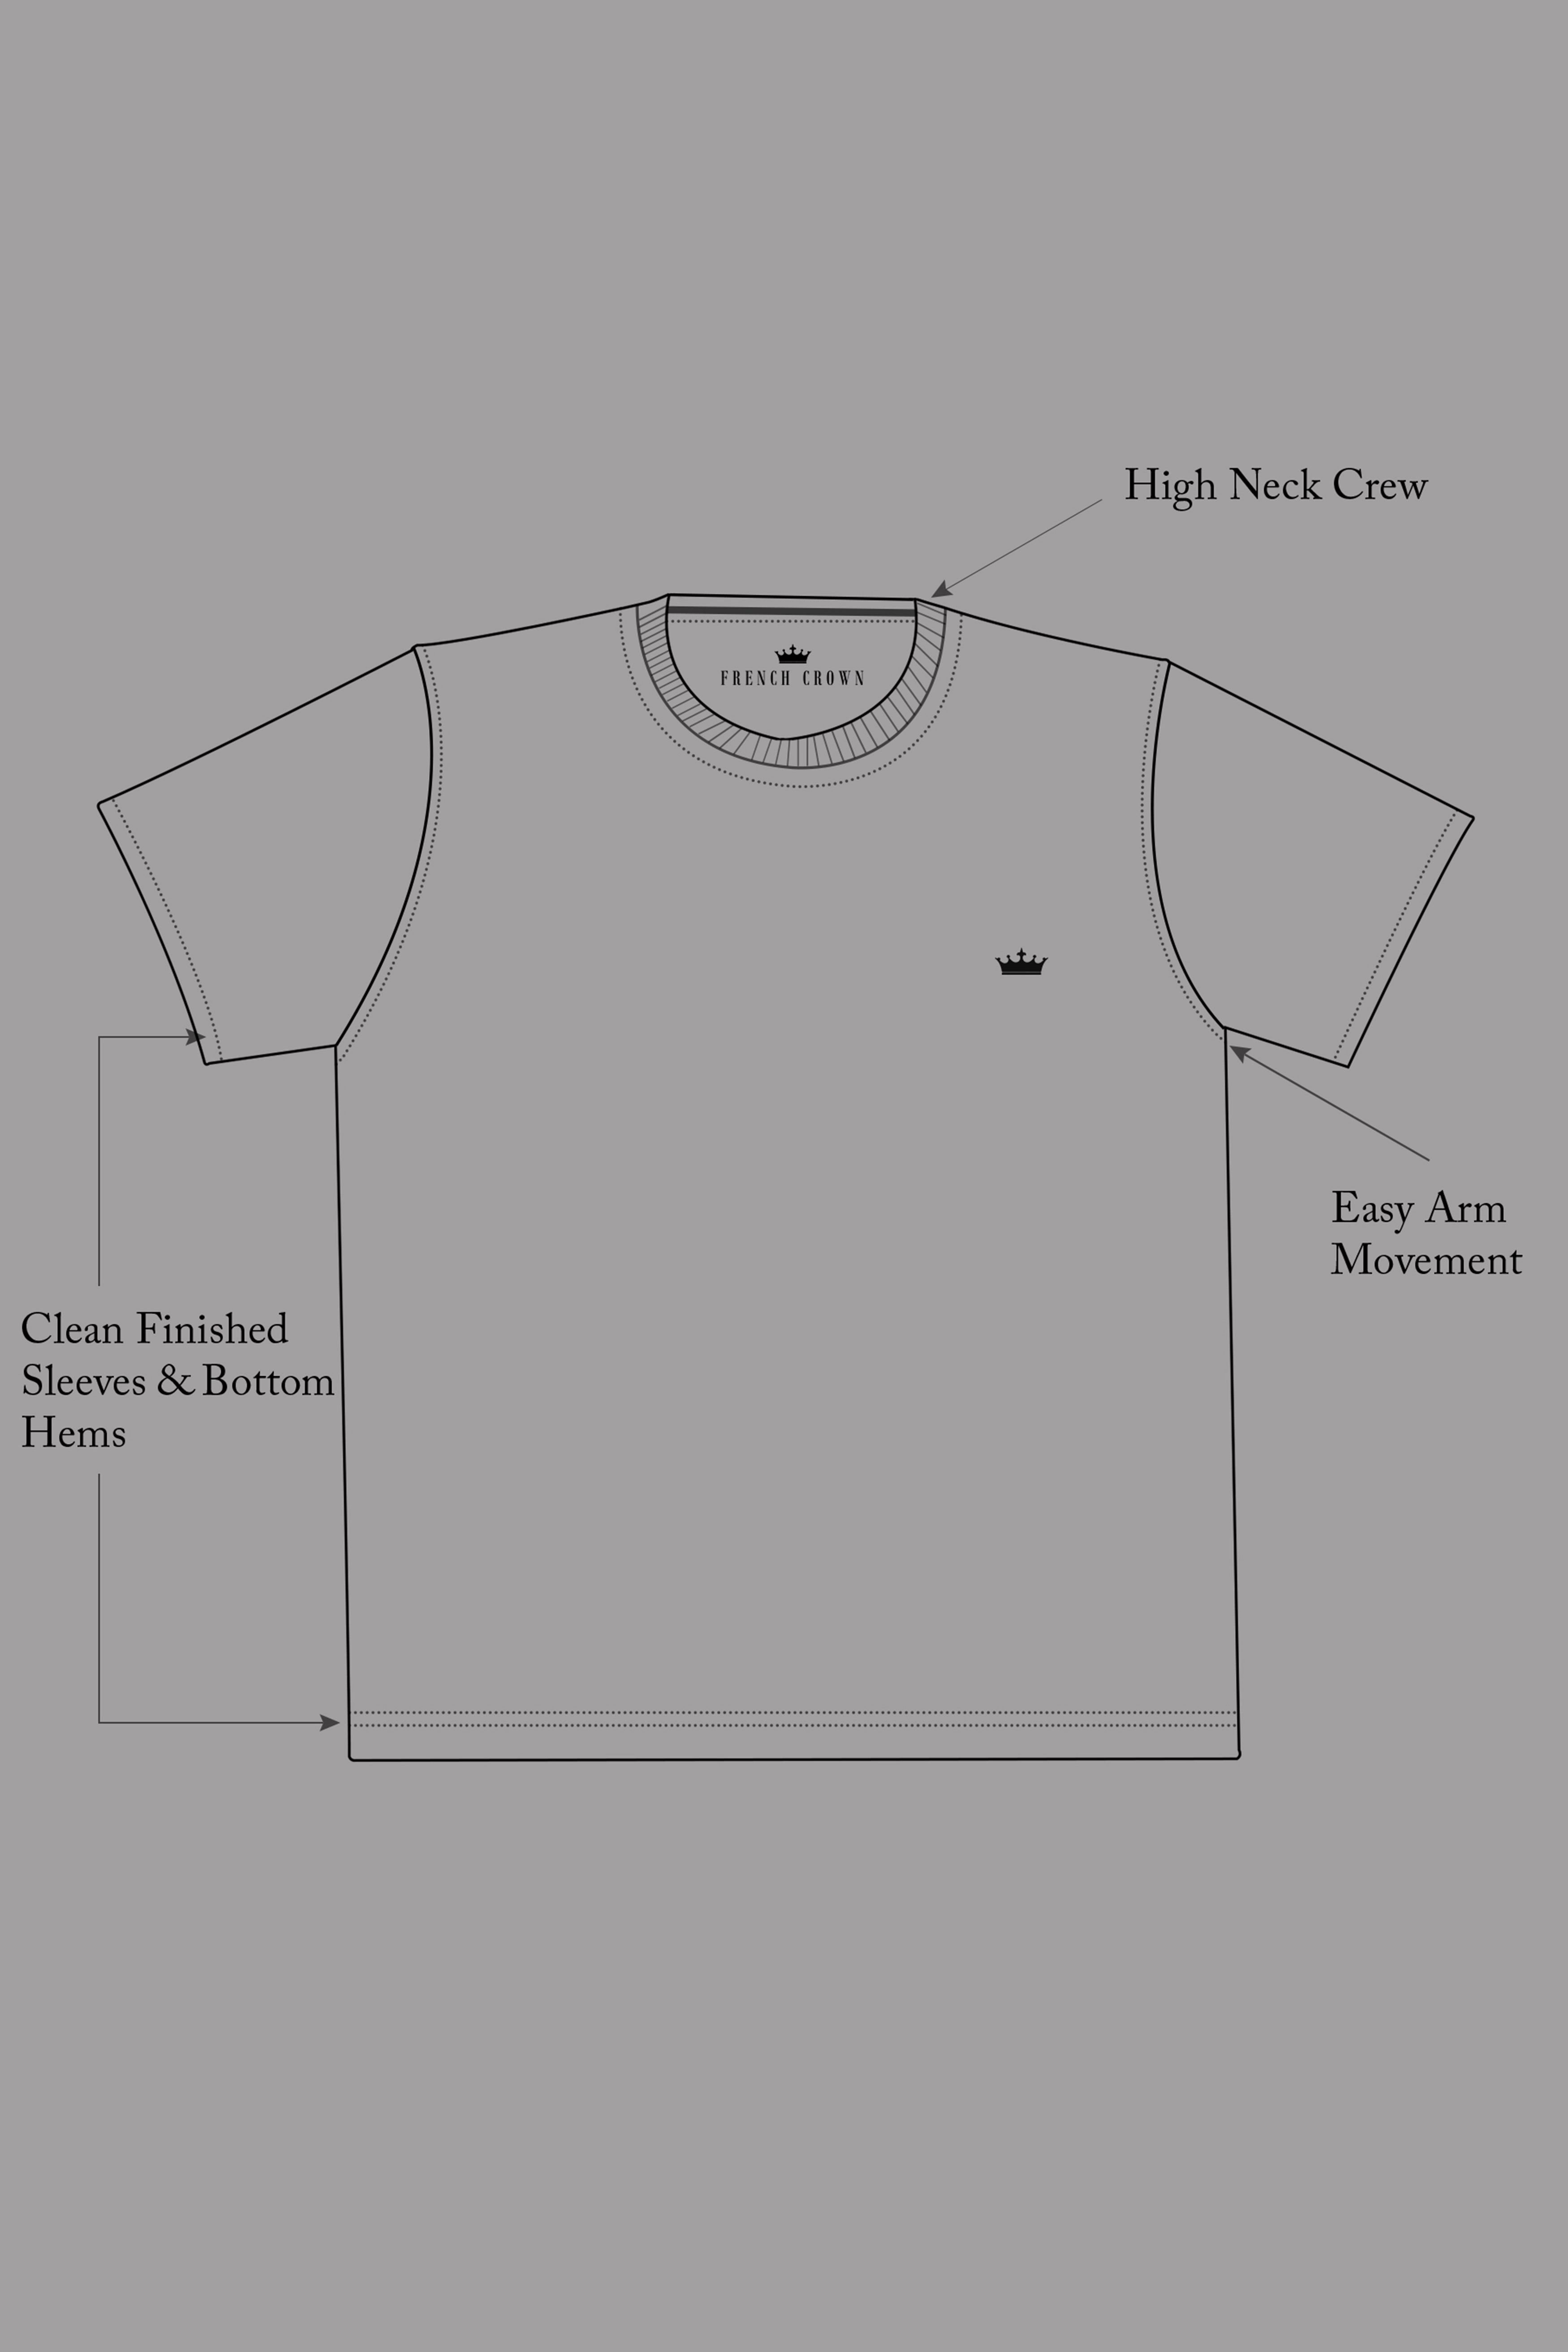 Sepia Brown Printed Premium Cotton Oversized T-shirt